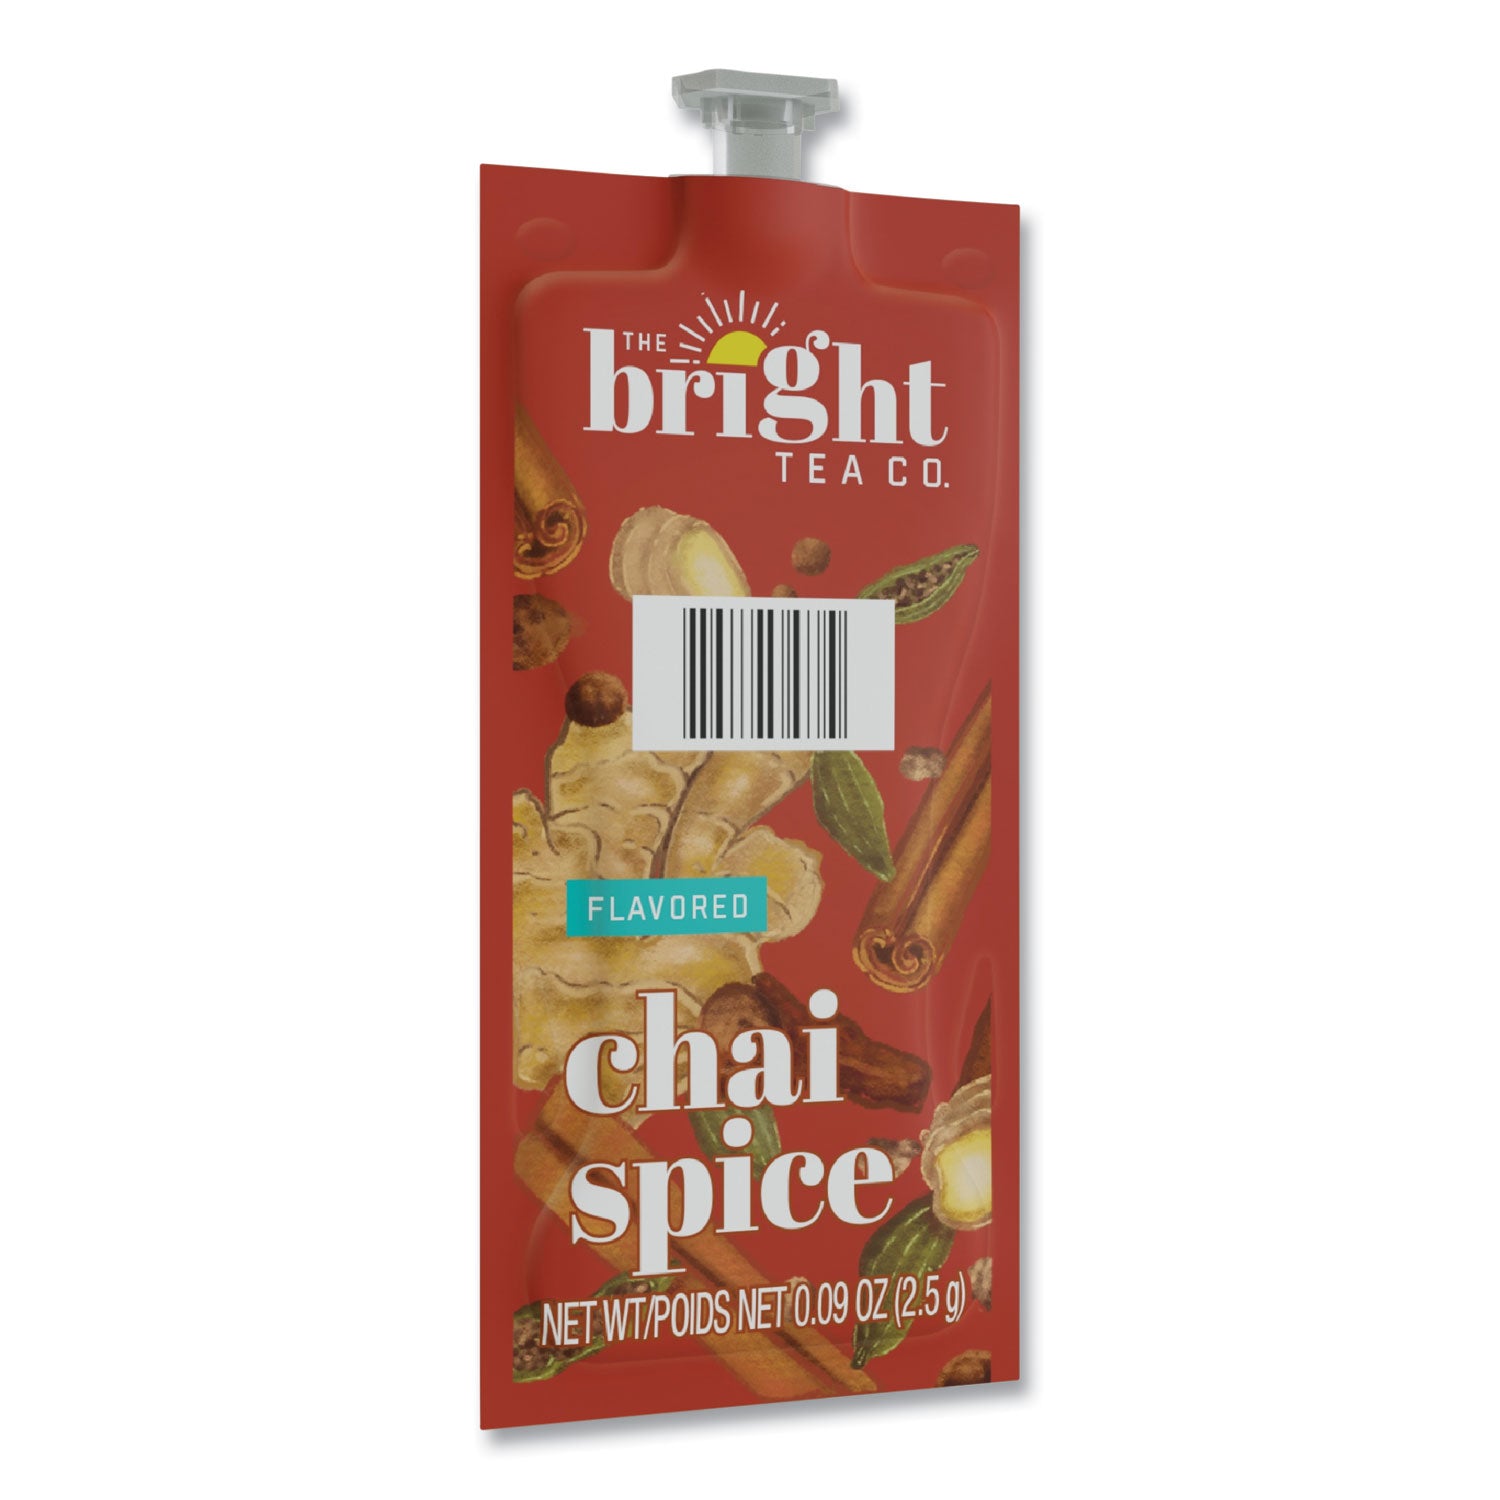 the-bright-tea-co-chai-spice-black-tea-freshpack-chai-spice-009-oz-pouch-100-carton_lav48021 - 2